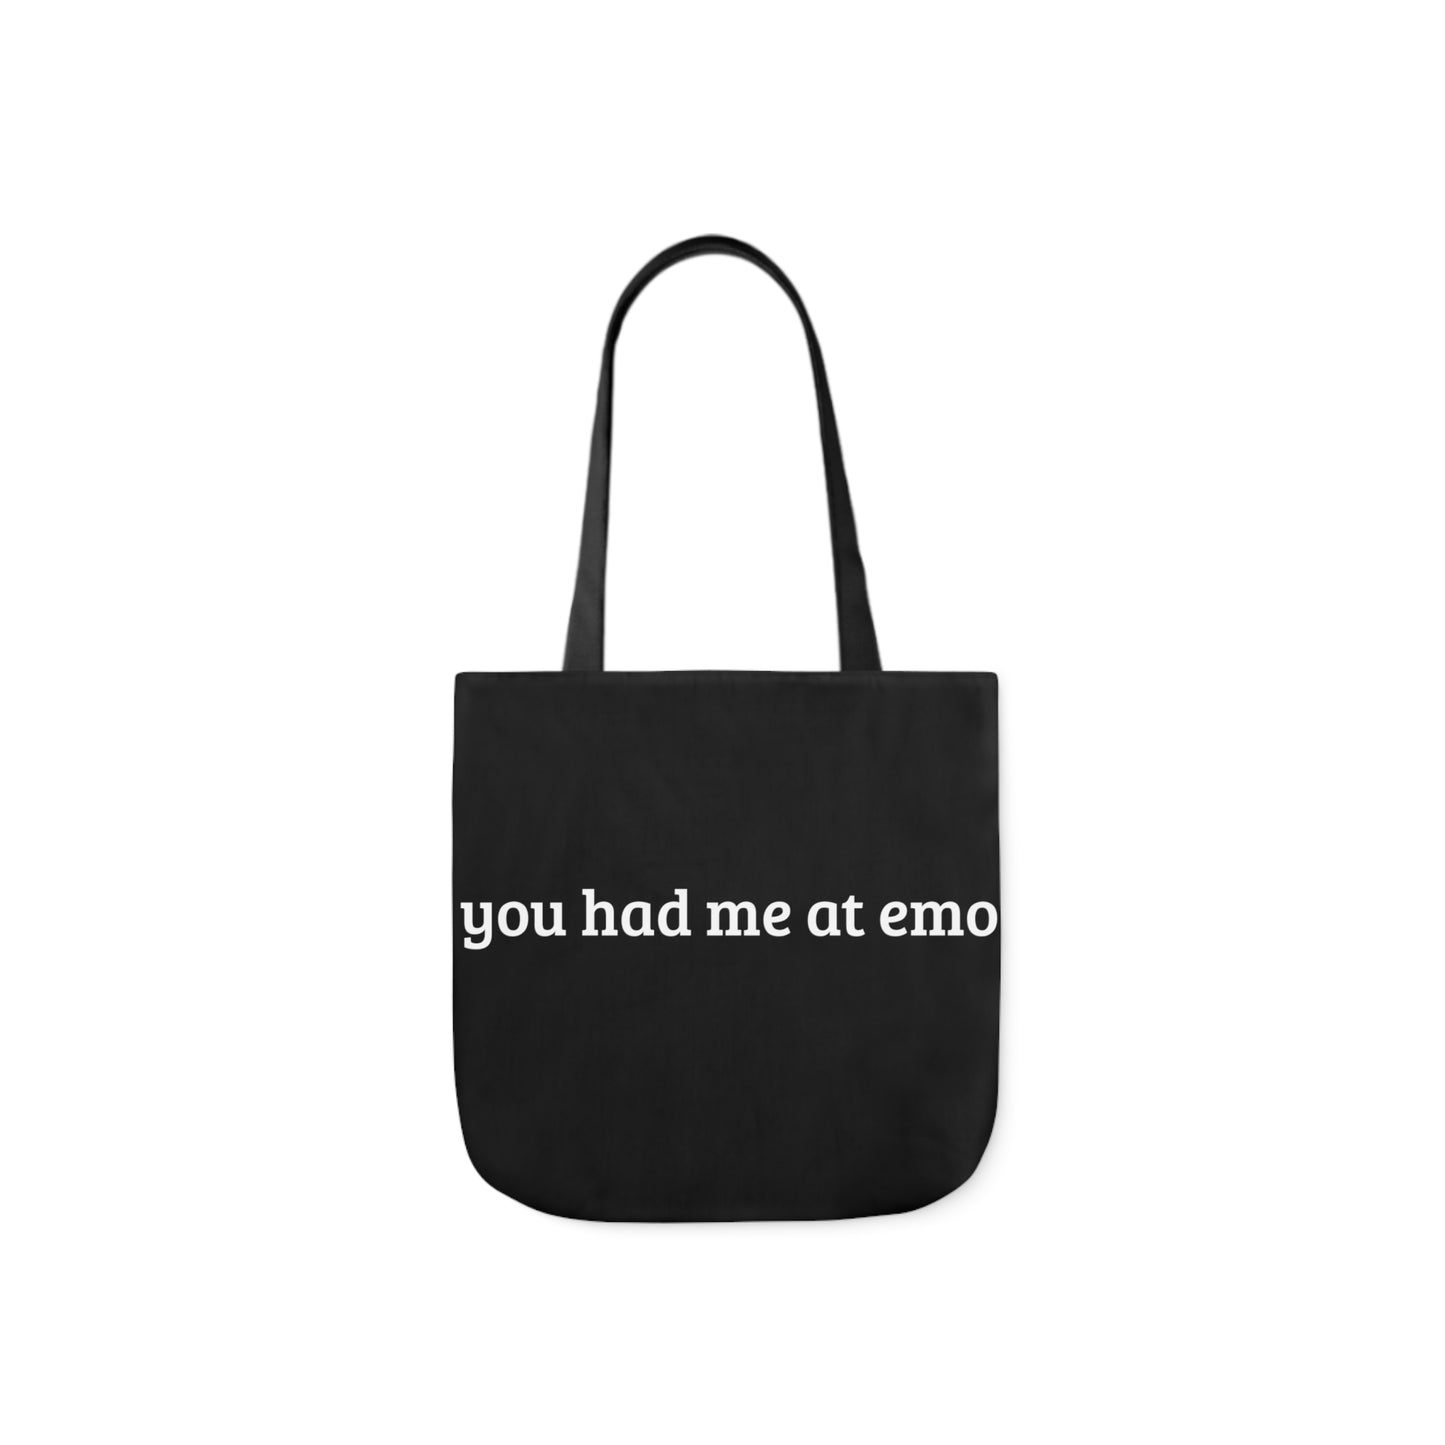 "you had me at emo" Canvas Tote Bag